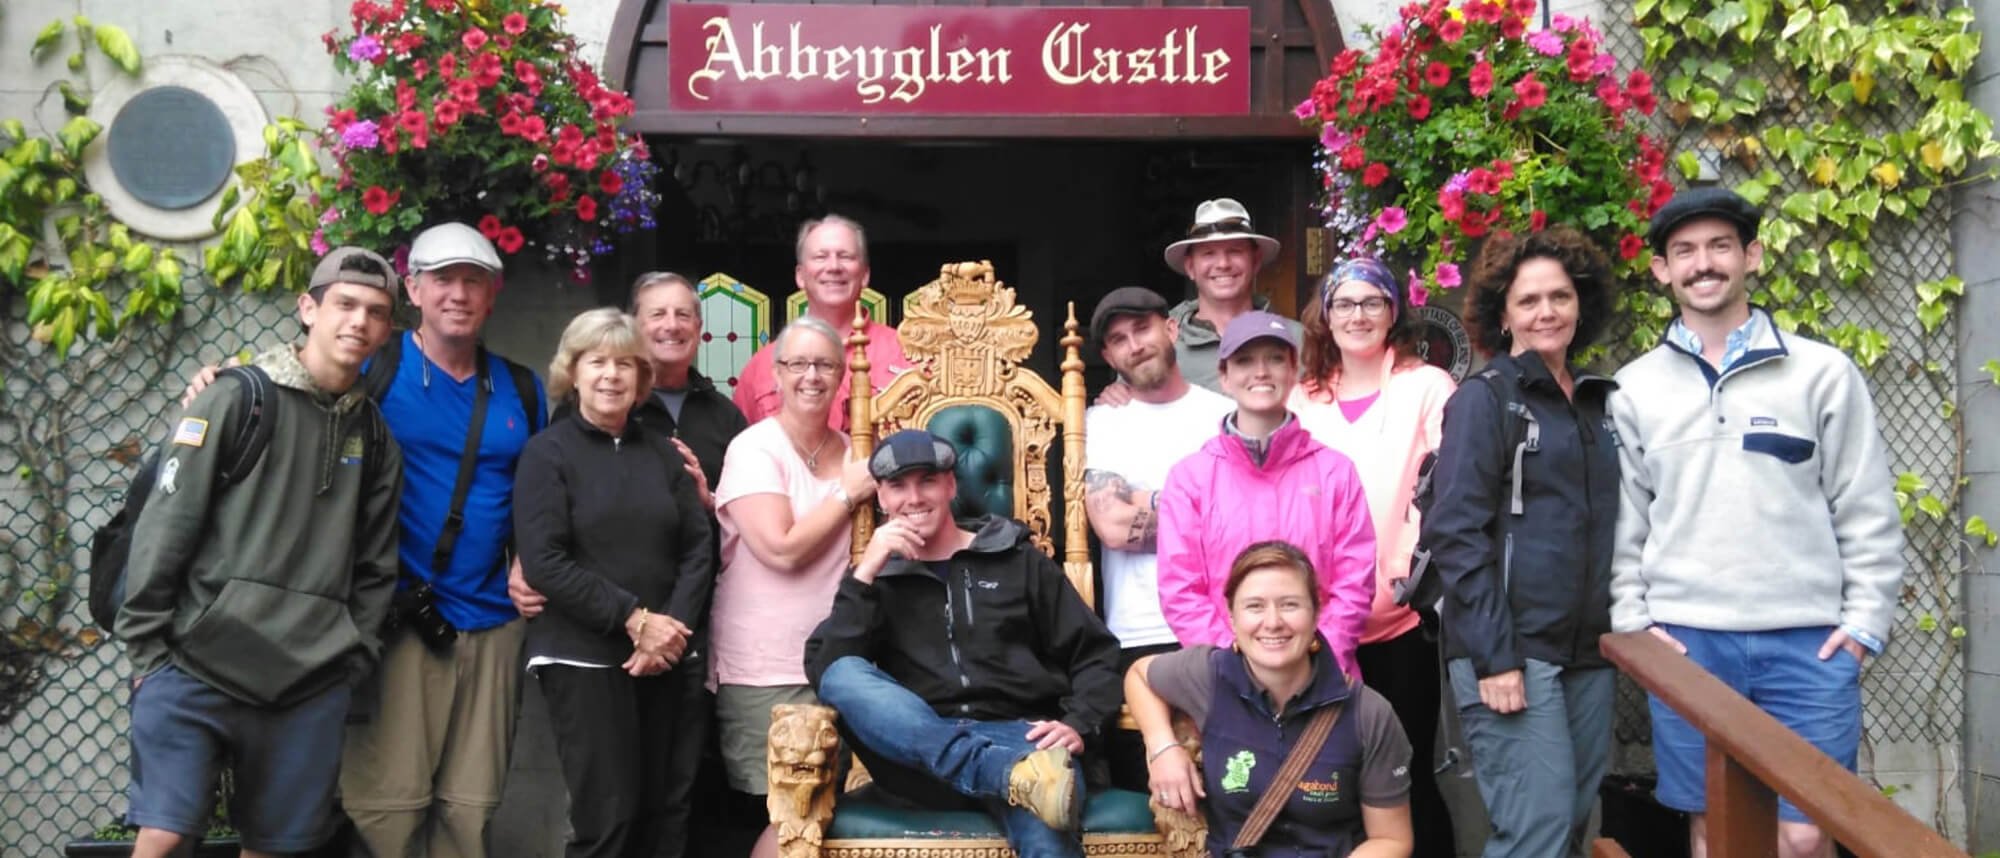 Smiling Vagabond tour group facing the camera outside the Abbeyglen Castle Hotel in Connemara